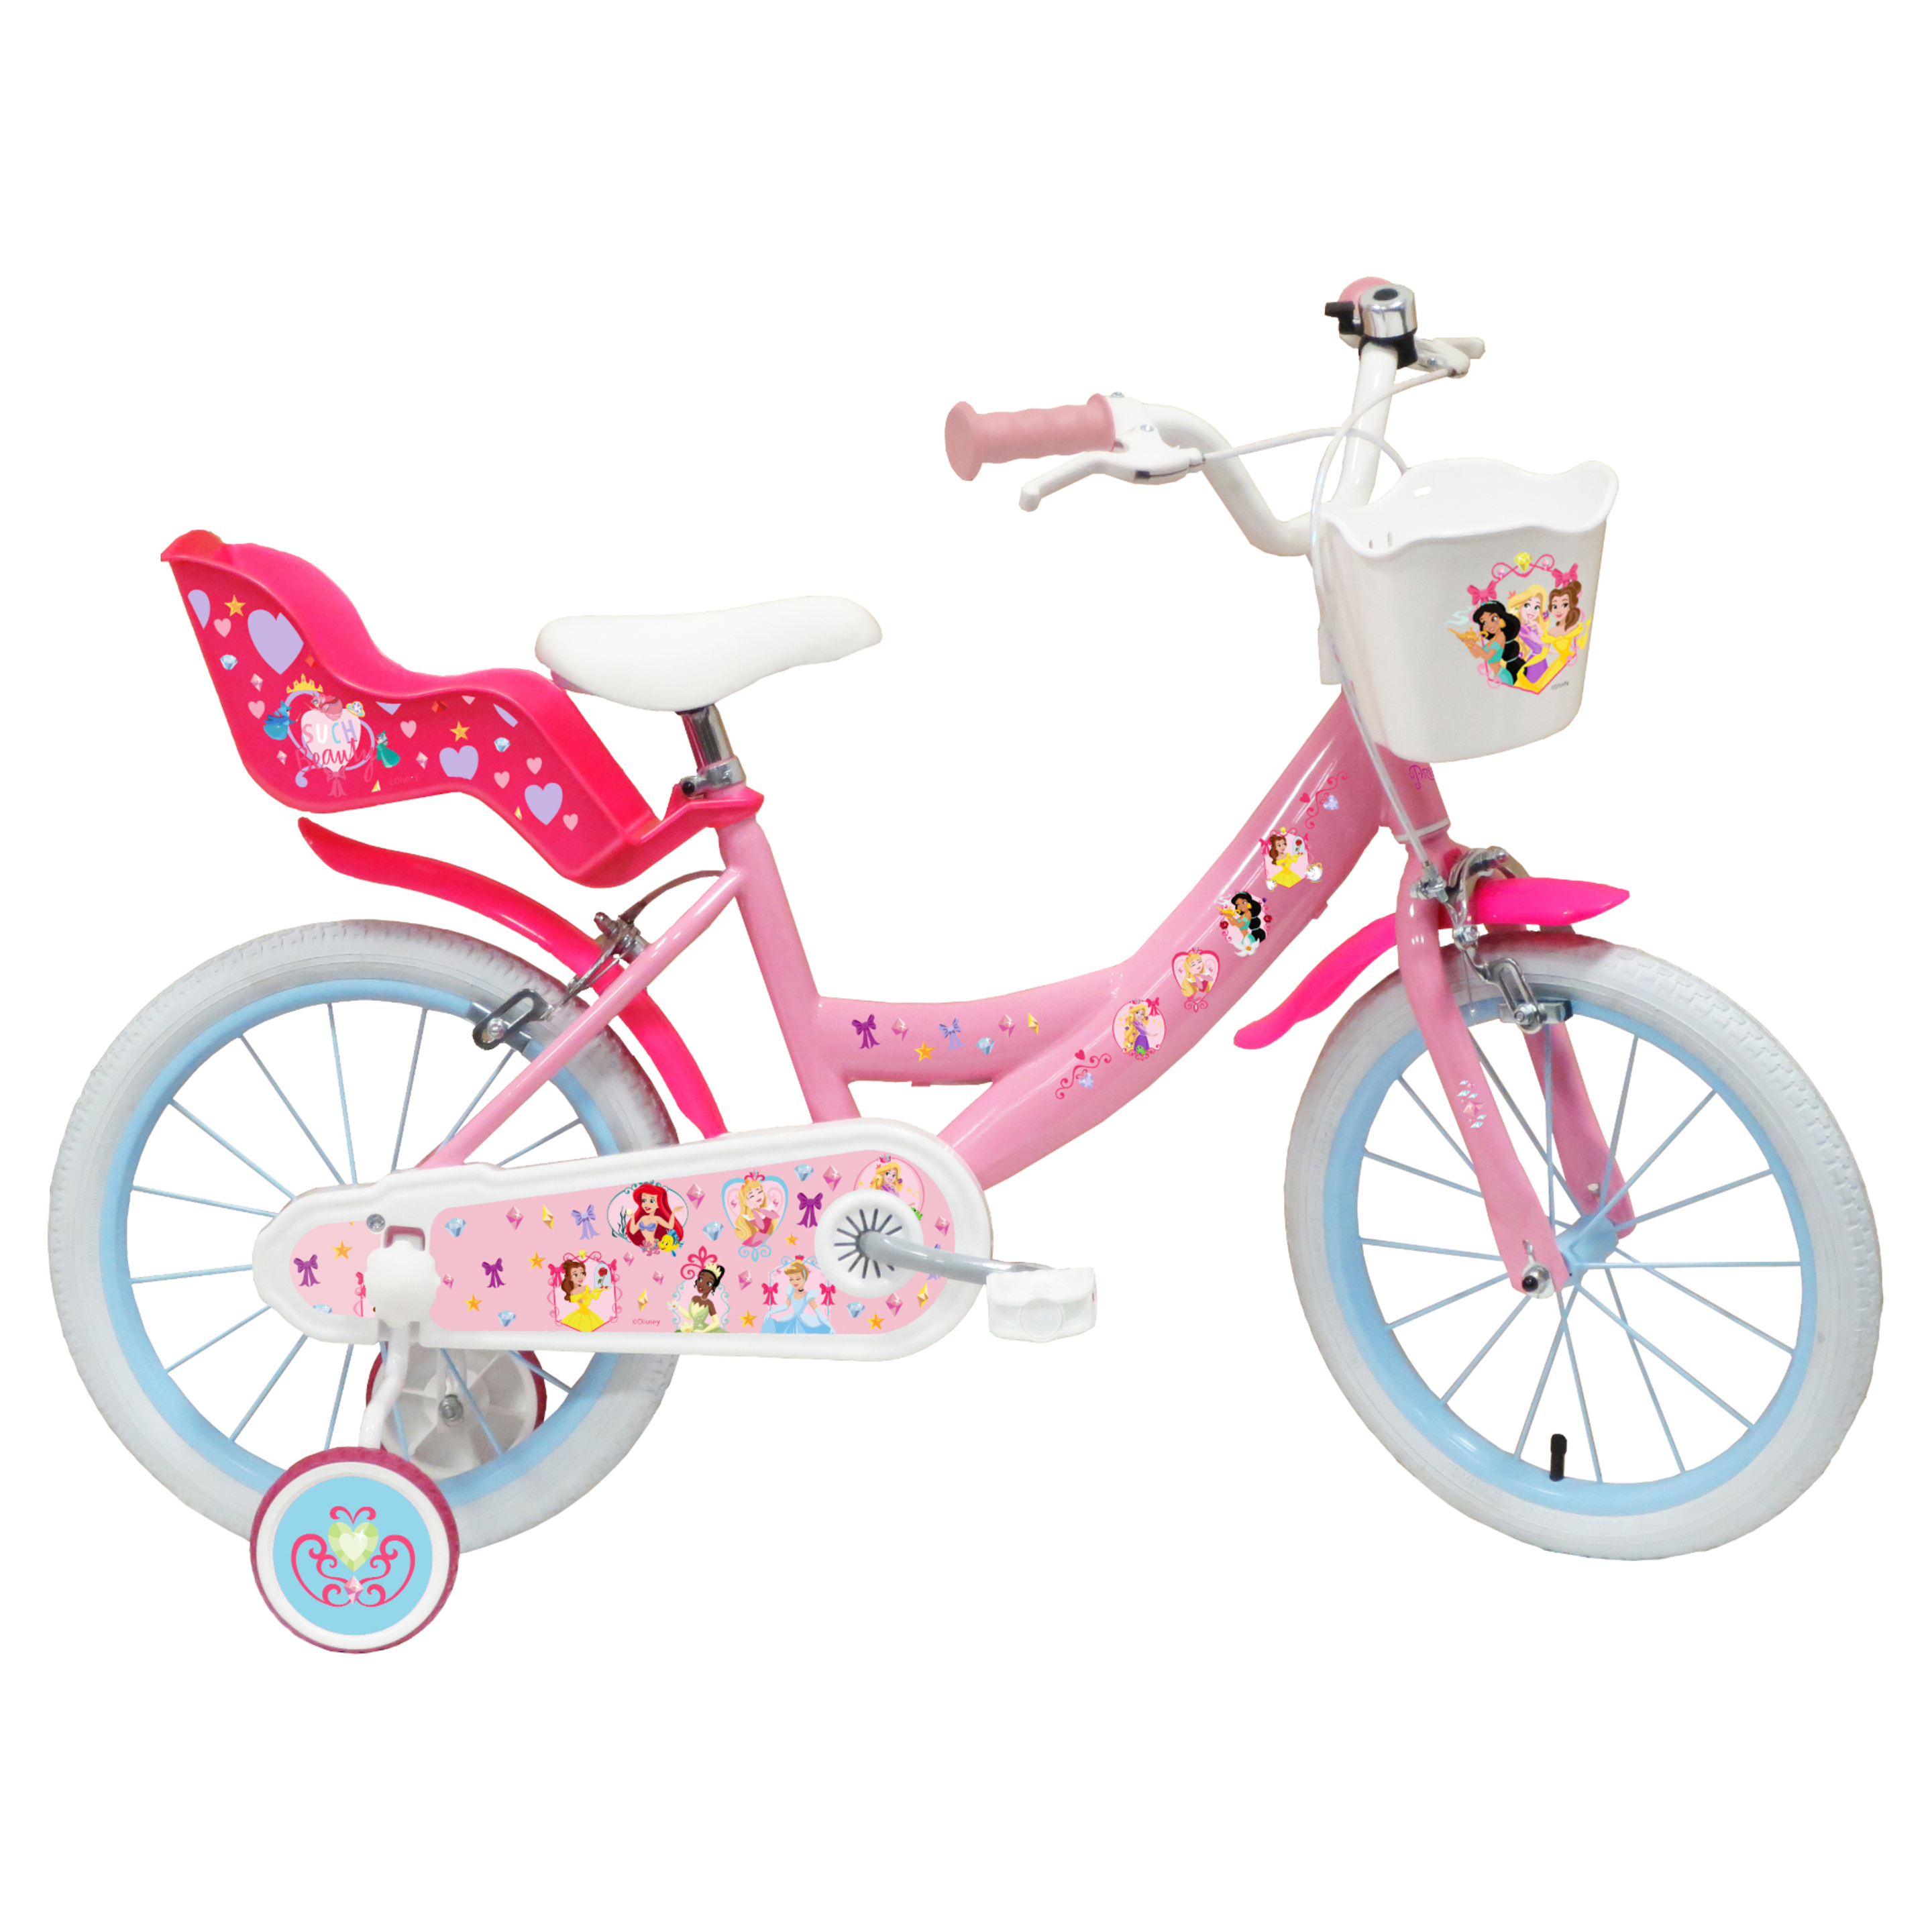 Bicicleta Niña 16 Pulgadas Disney Princess 5-7 Años - rosa - 